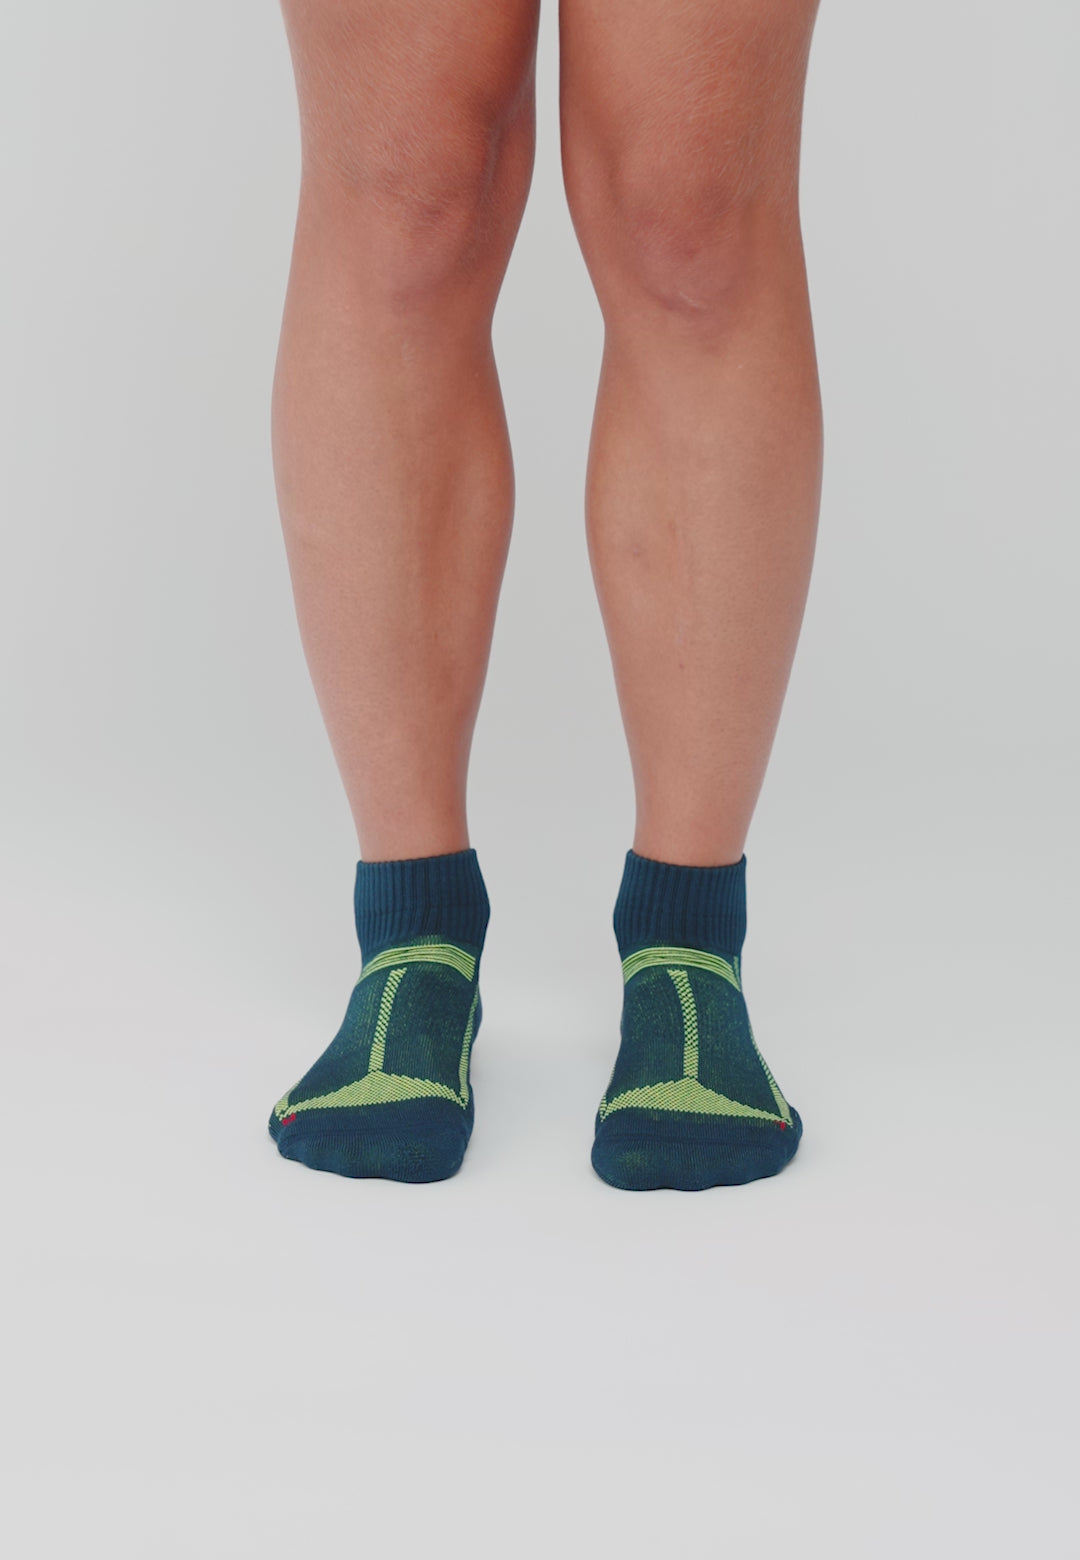 DANISH ENDURANCE Calcetines Deportivos de Media Caña de  Running,Transpirables, Hombres y Mujeres, 3 o 5 pares, 3 x Negro sólido,  35-38 : : Moda